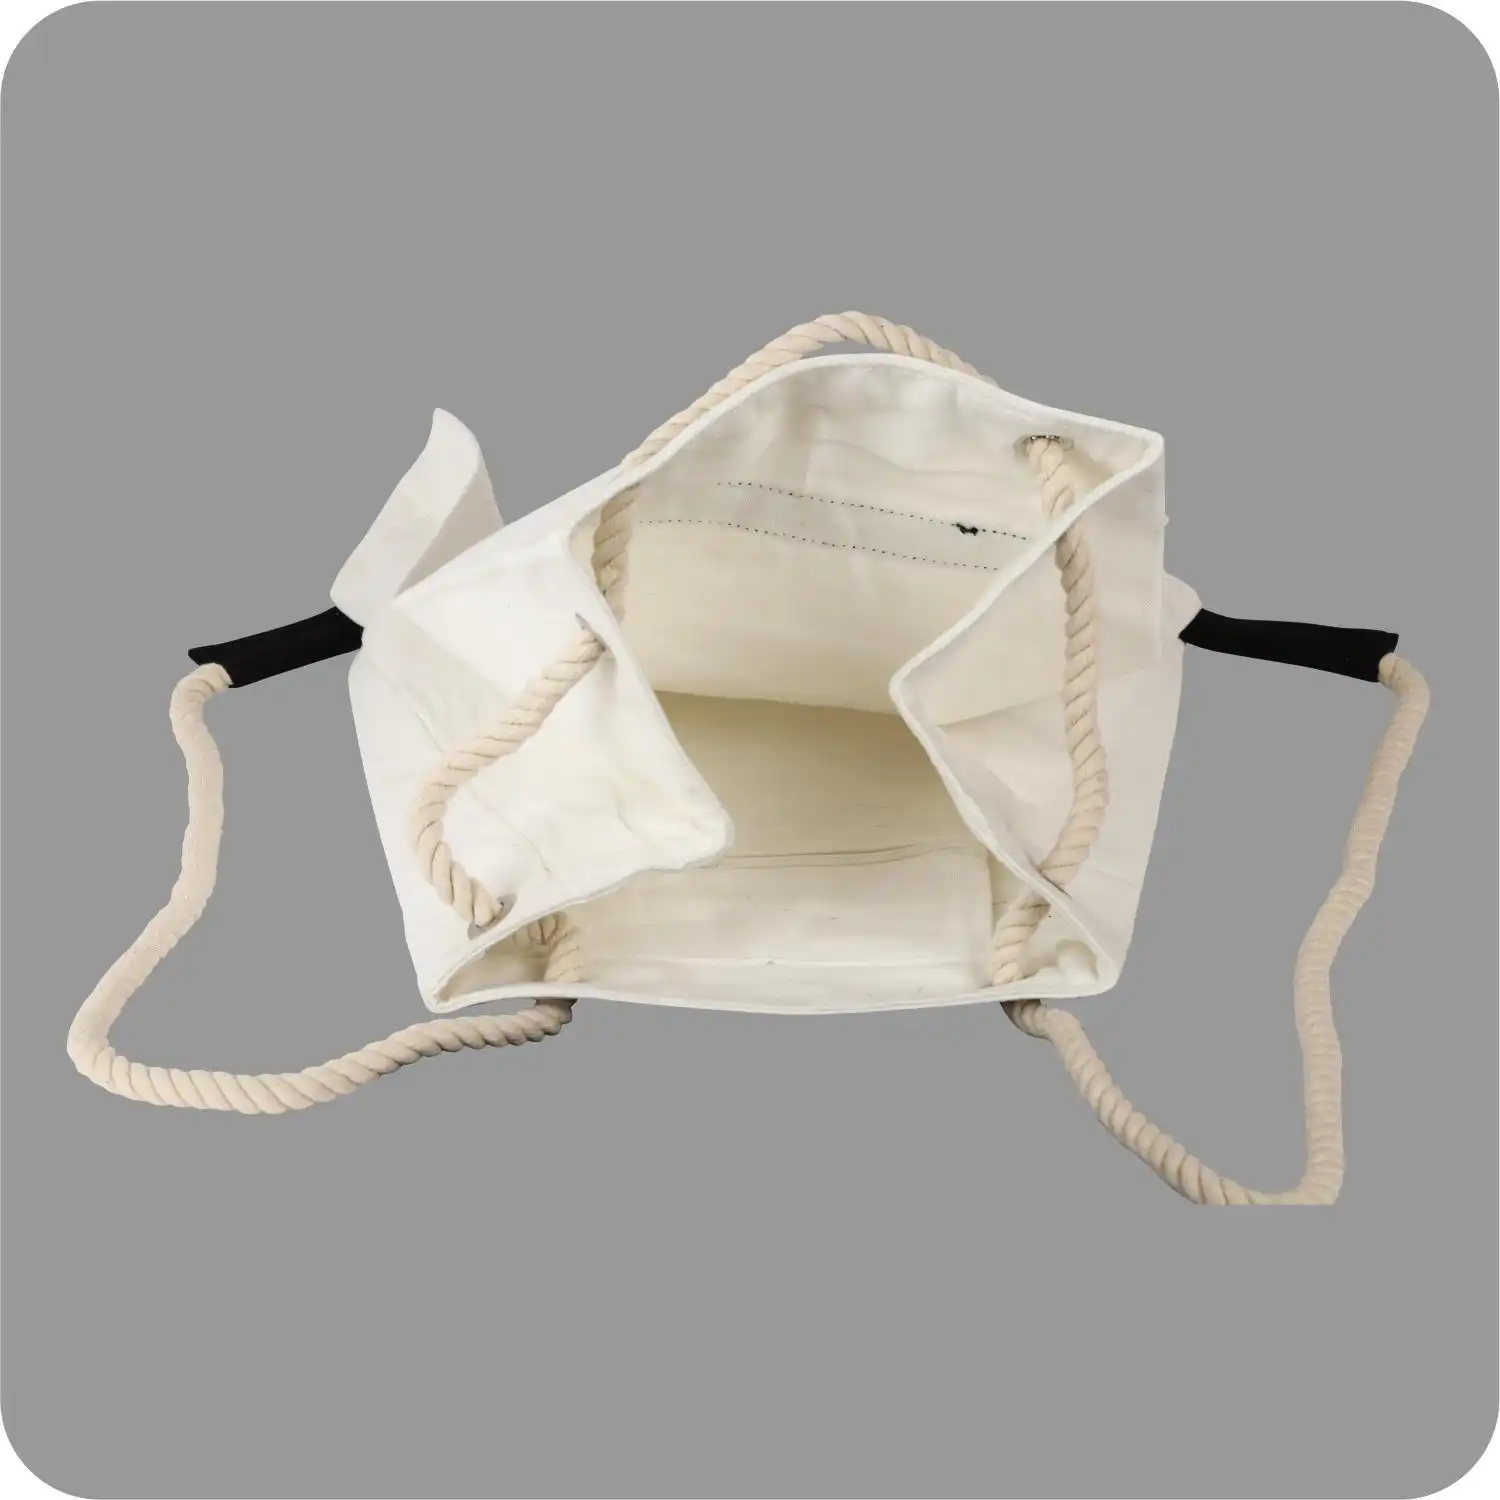 Lightweight, 15”x17” traveling purpose, locked stitch canvas bags